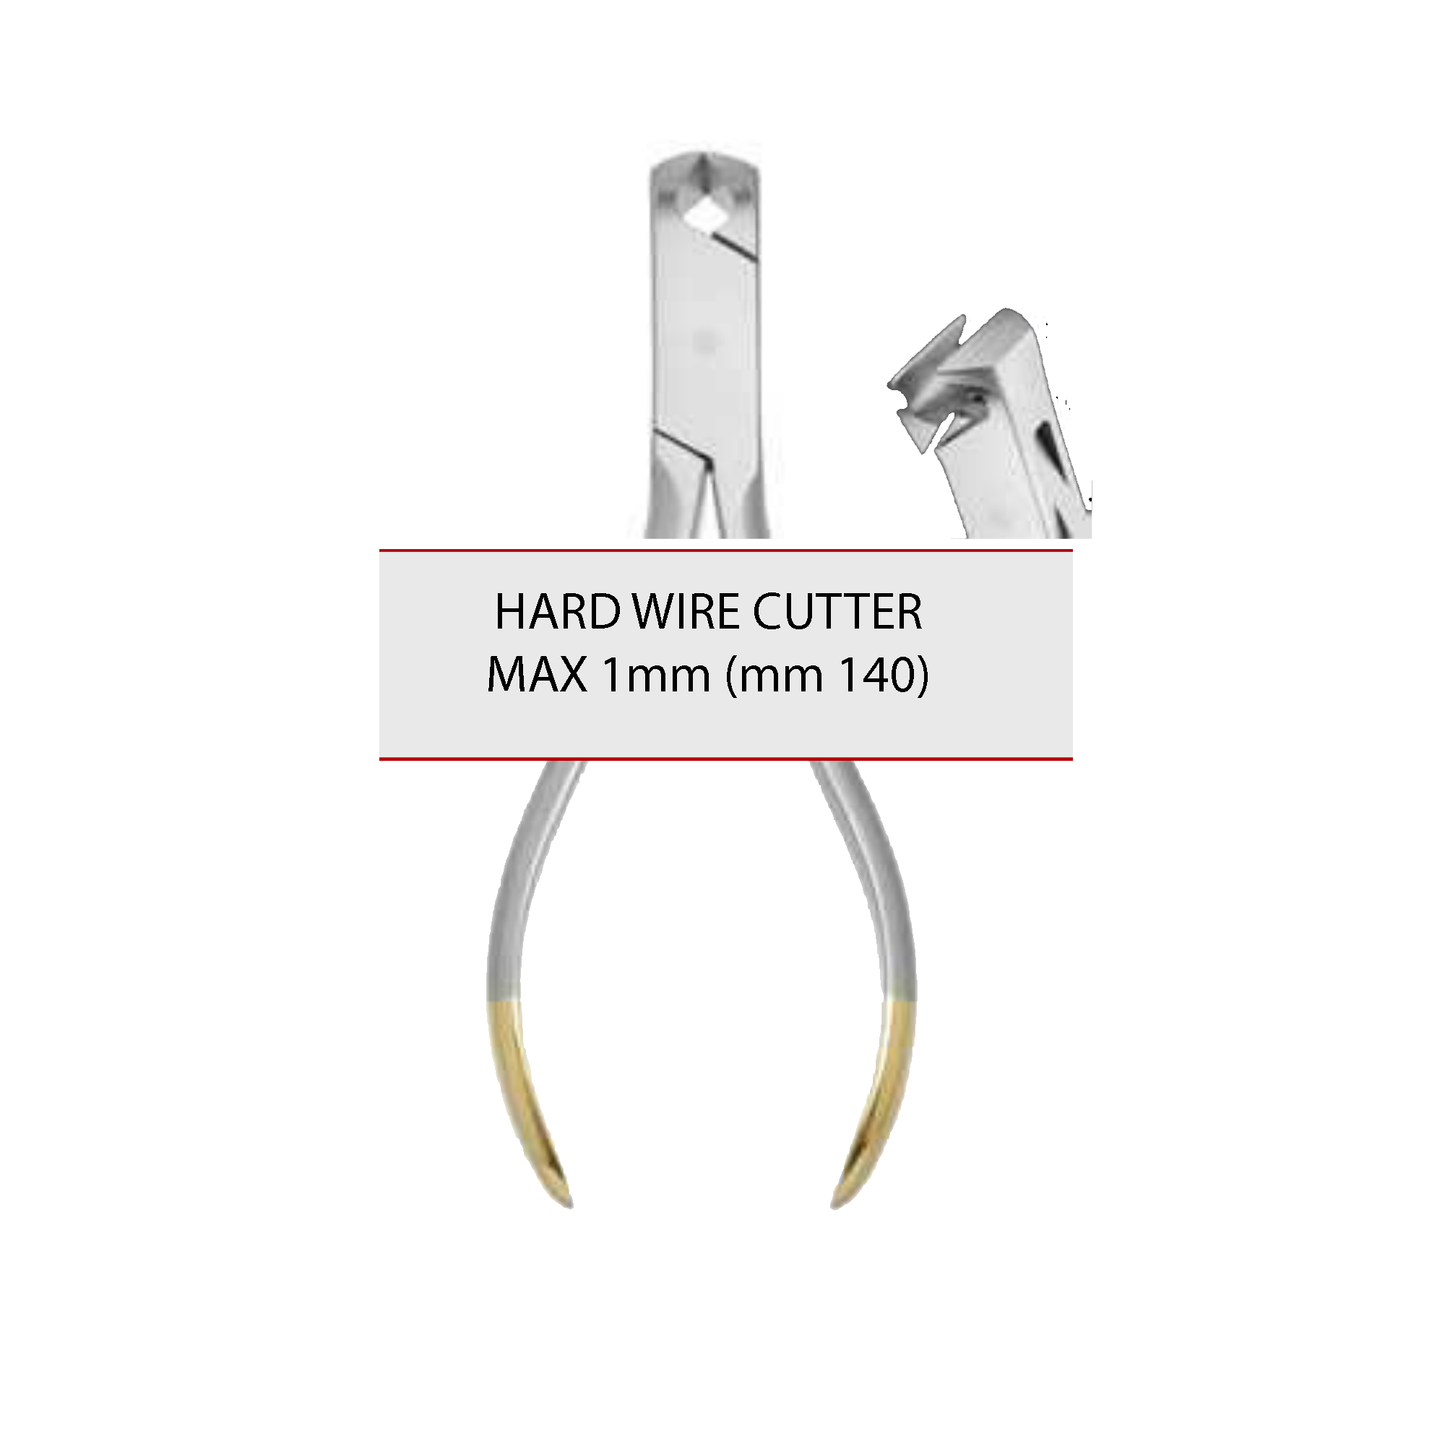 HARD WIRE CUTTER 1mm (mm 140) cod 1022-3